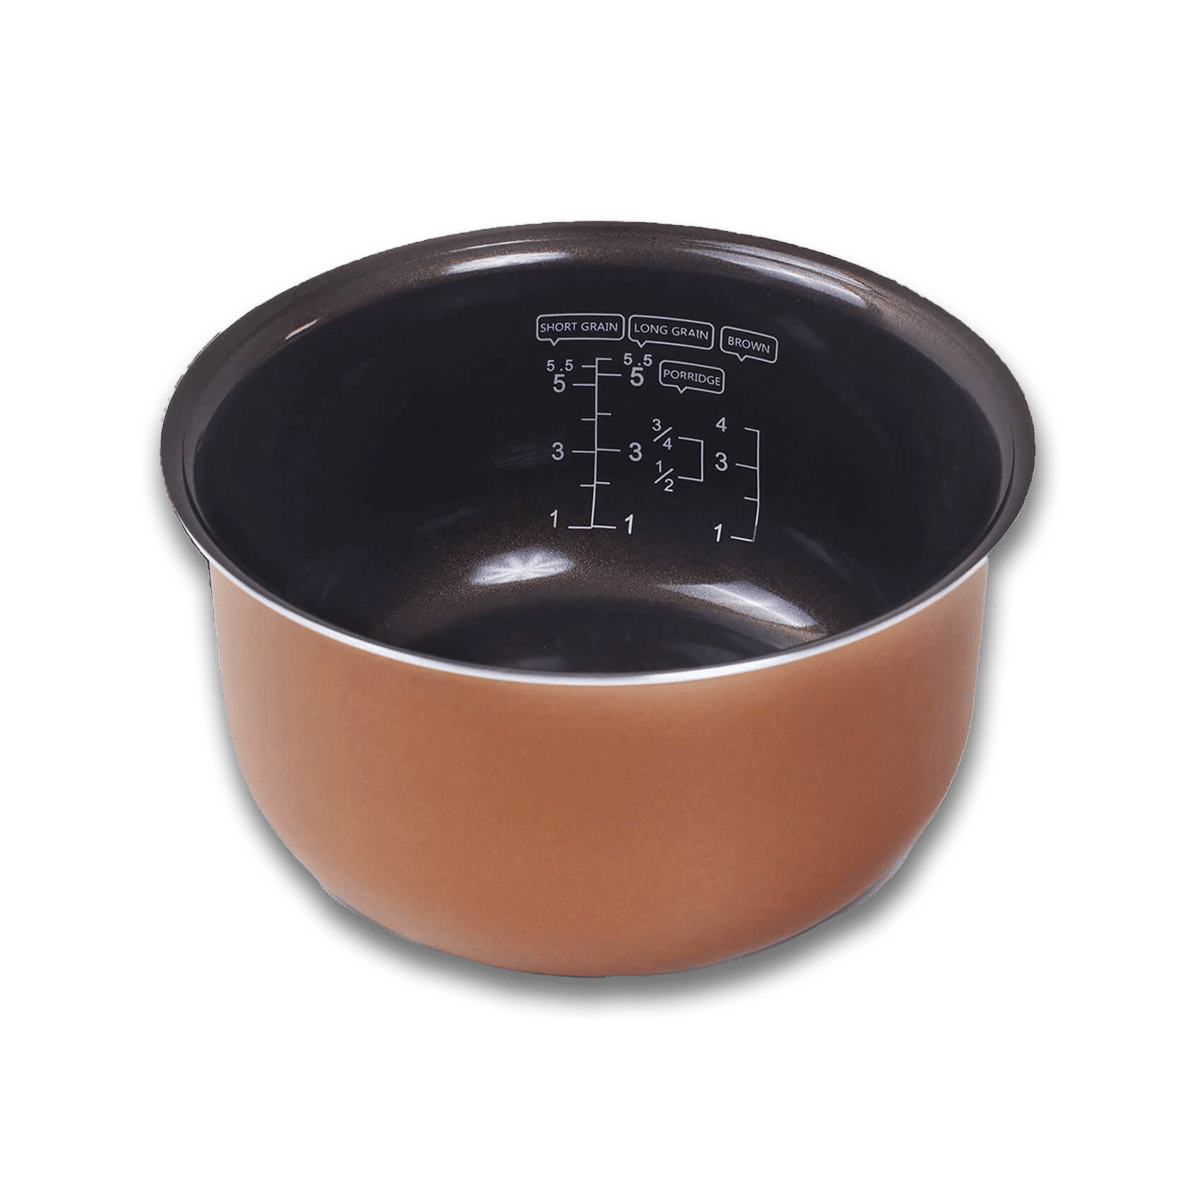 Kumo Rice Cooker ‘Ninja’ Ceramic Coated Inner Bowl